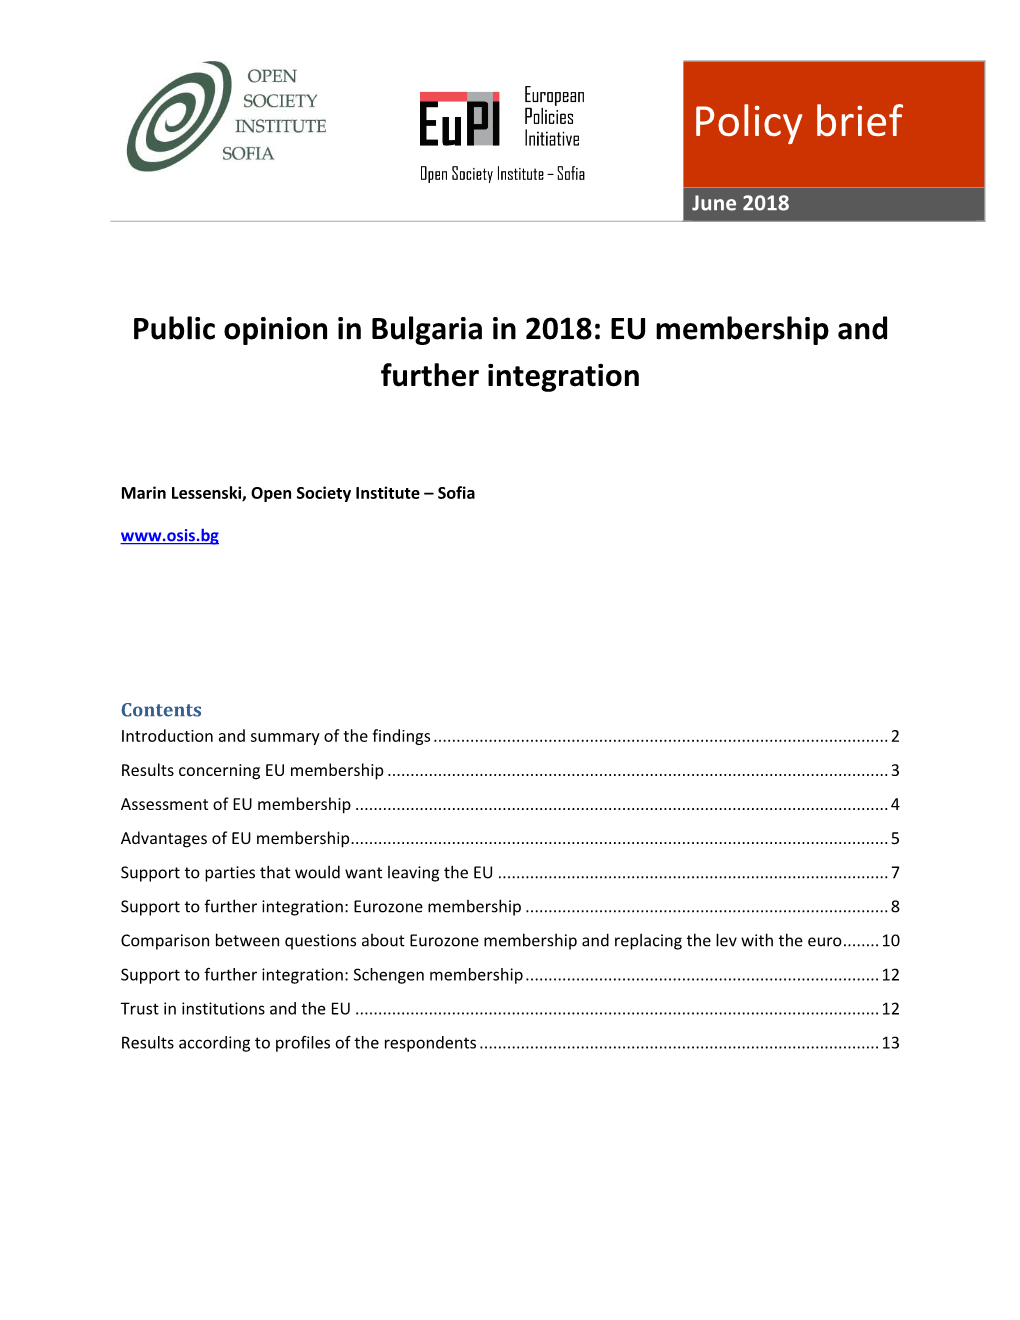 Public Opinion in Bulgaria in 2018: EU Membership and Further Integration